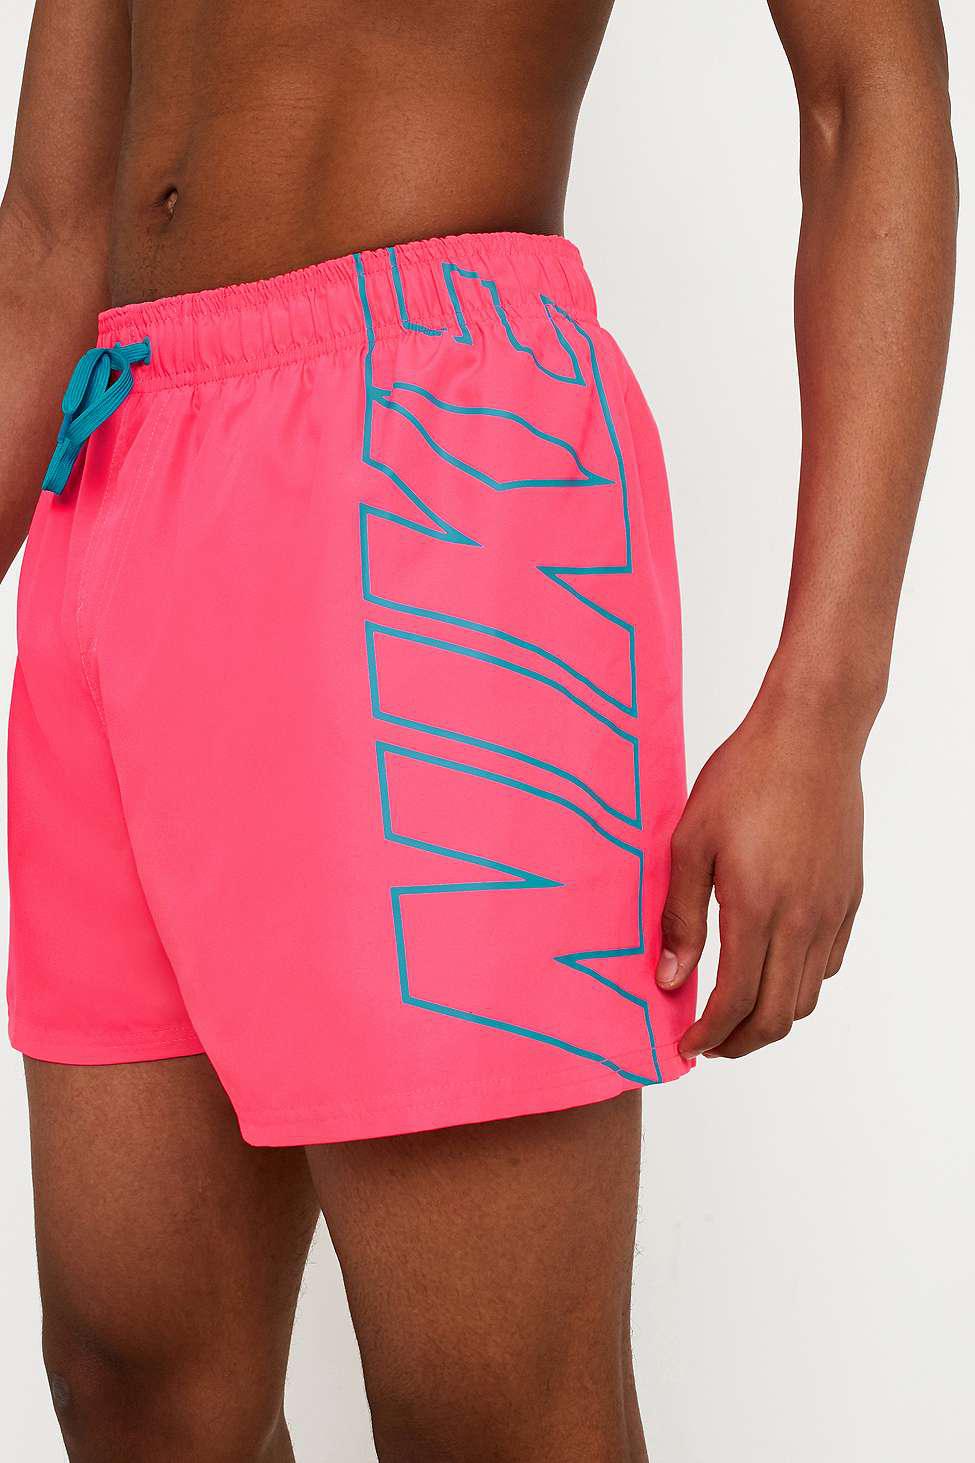 pink nike swim trunks cheap online